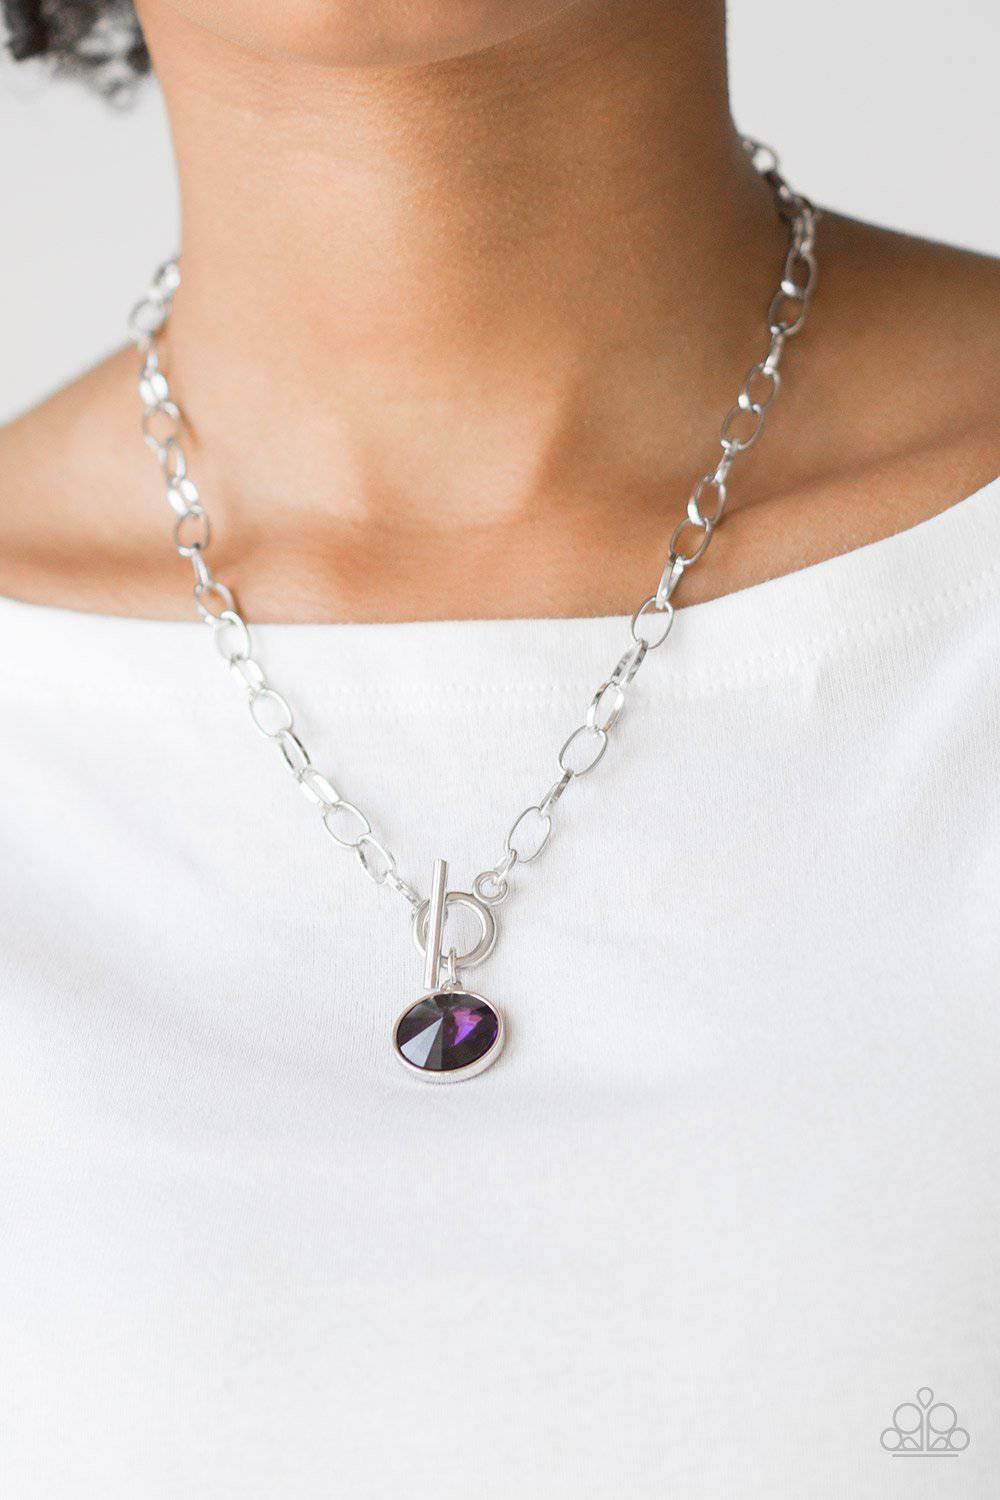 She Sparkles On - Purple Gem Necklace - Paparazzi Accessories - GlaMarous Titi Jewels